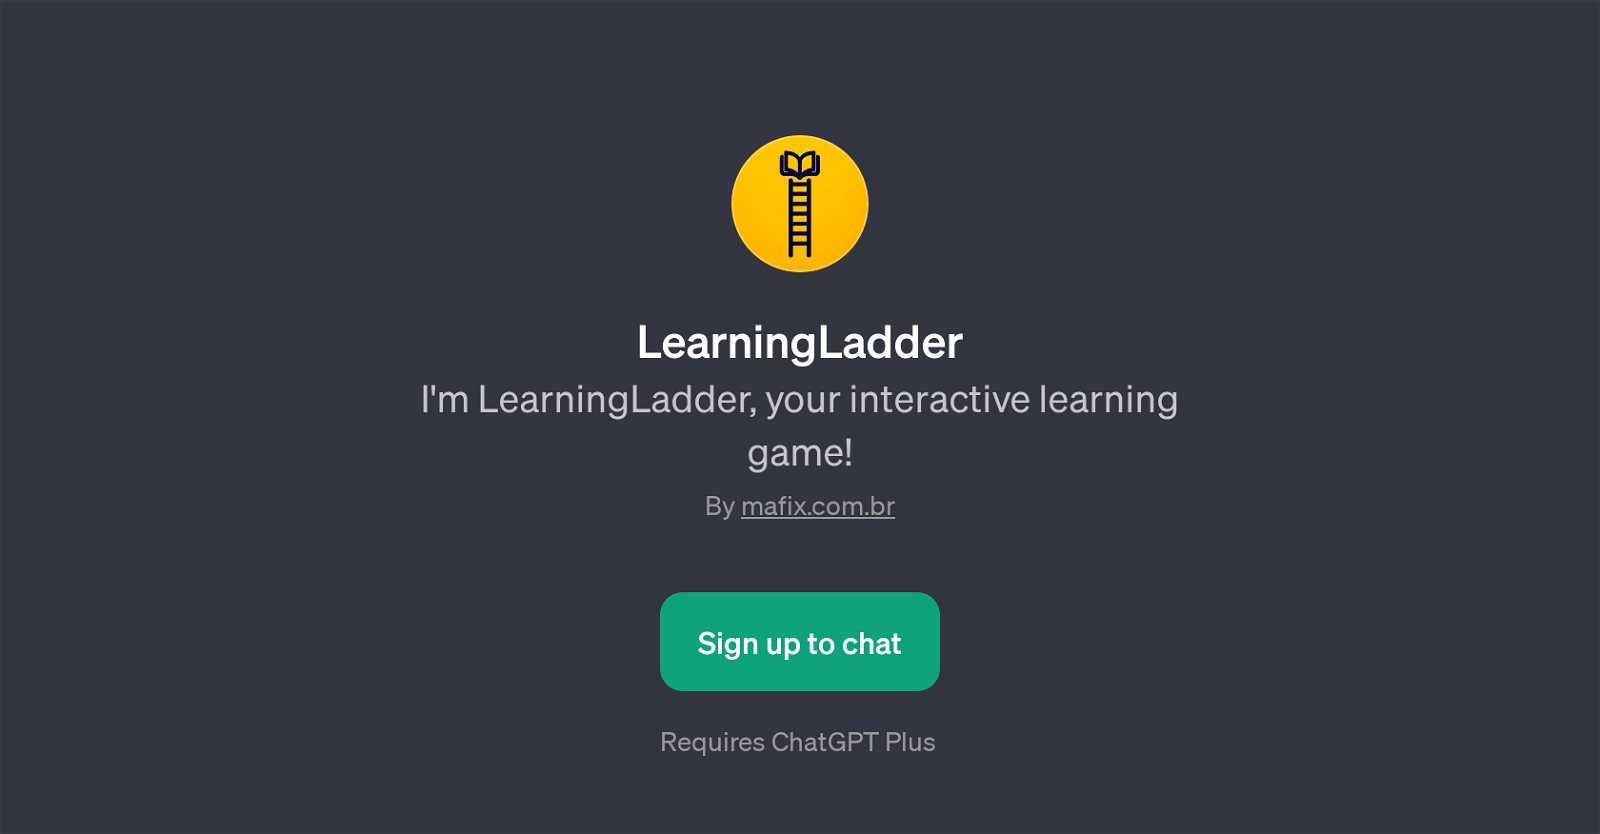 LearningLadder website